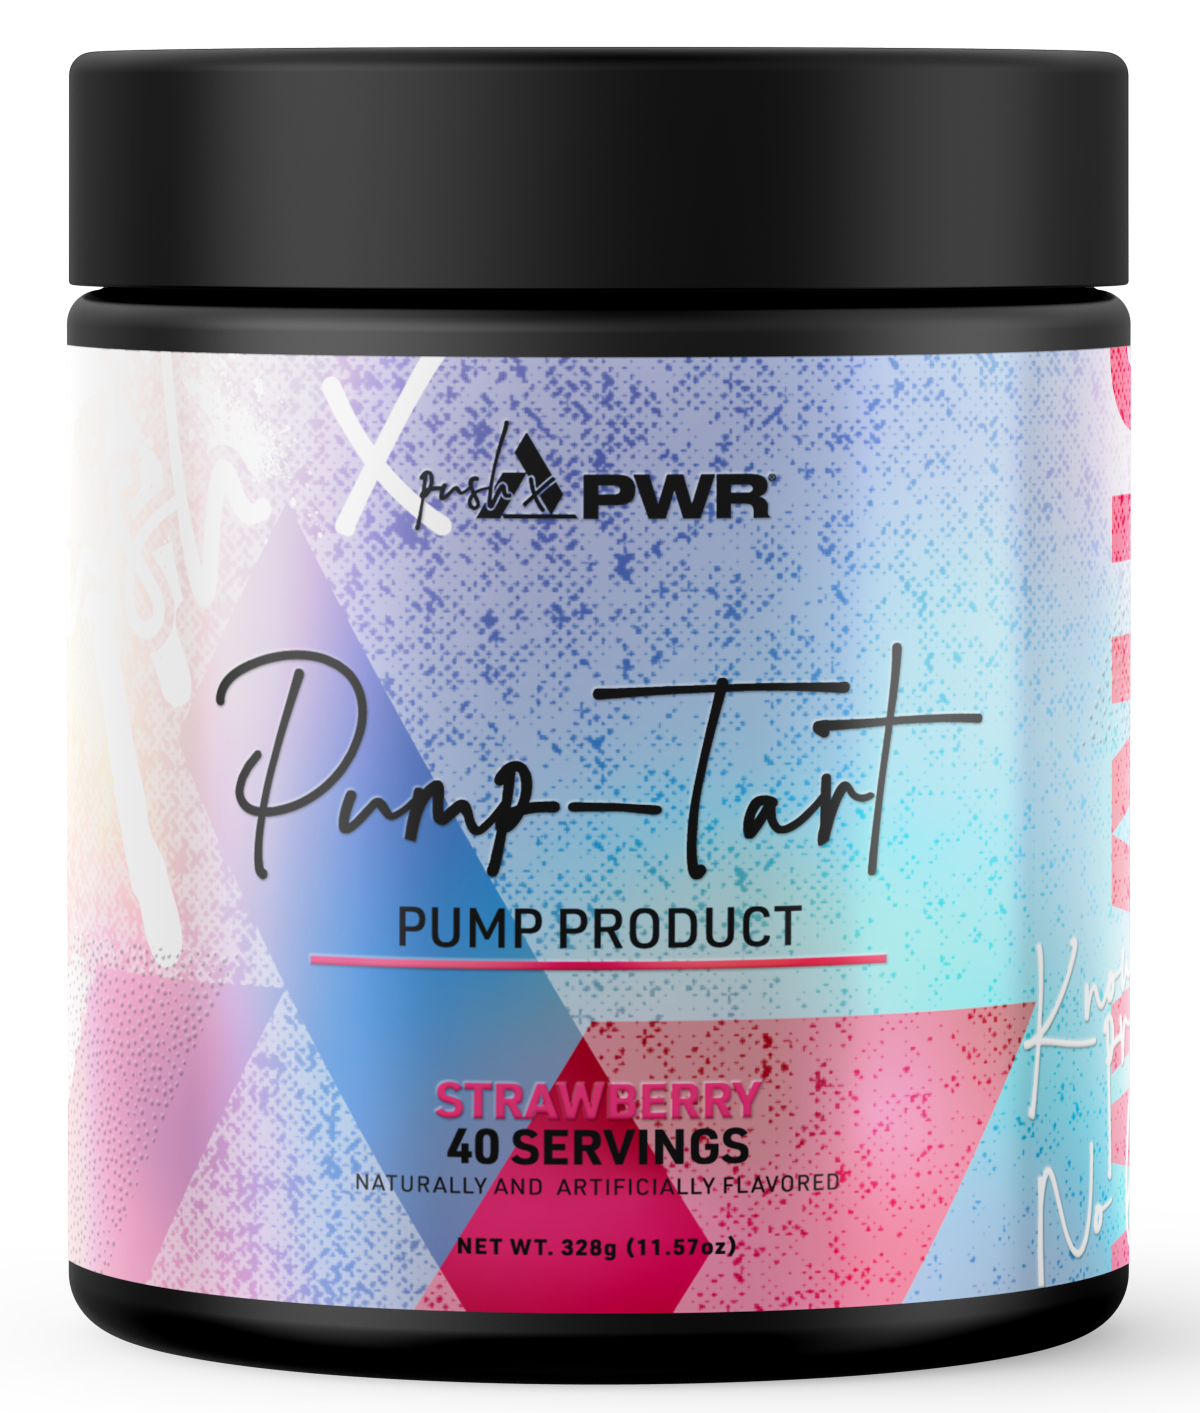 pushxPWR Pump Tart